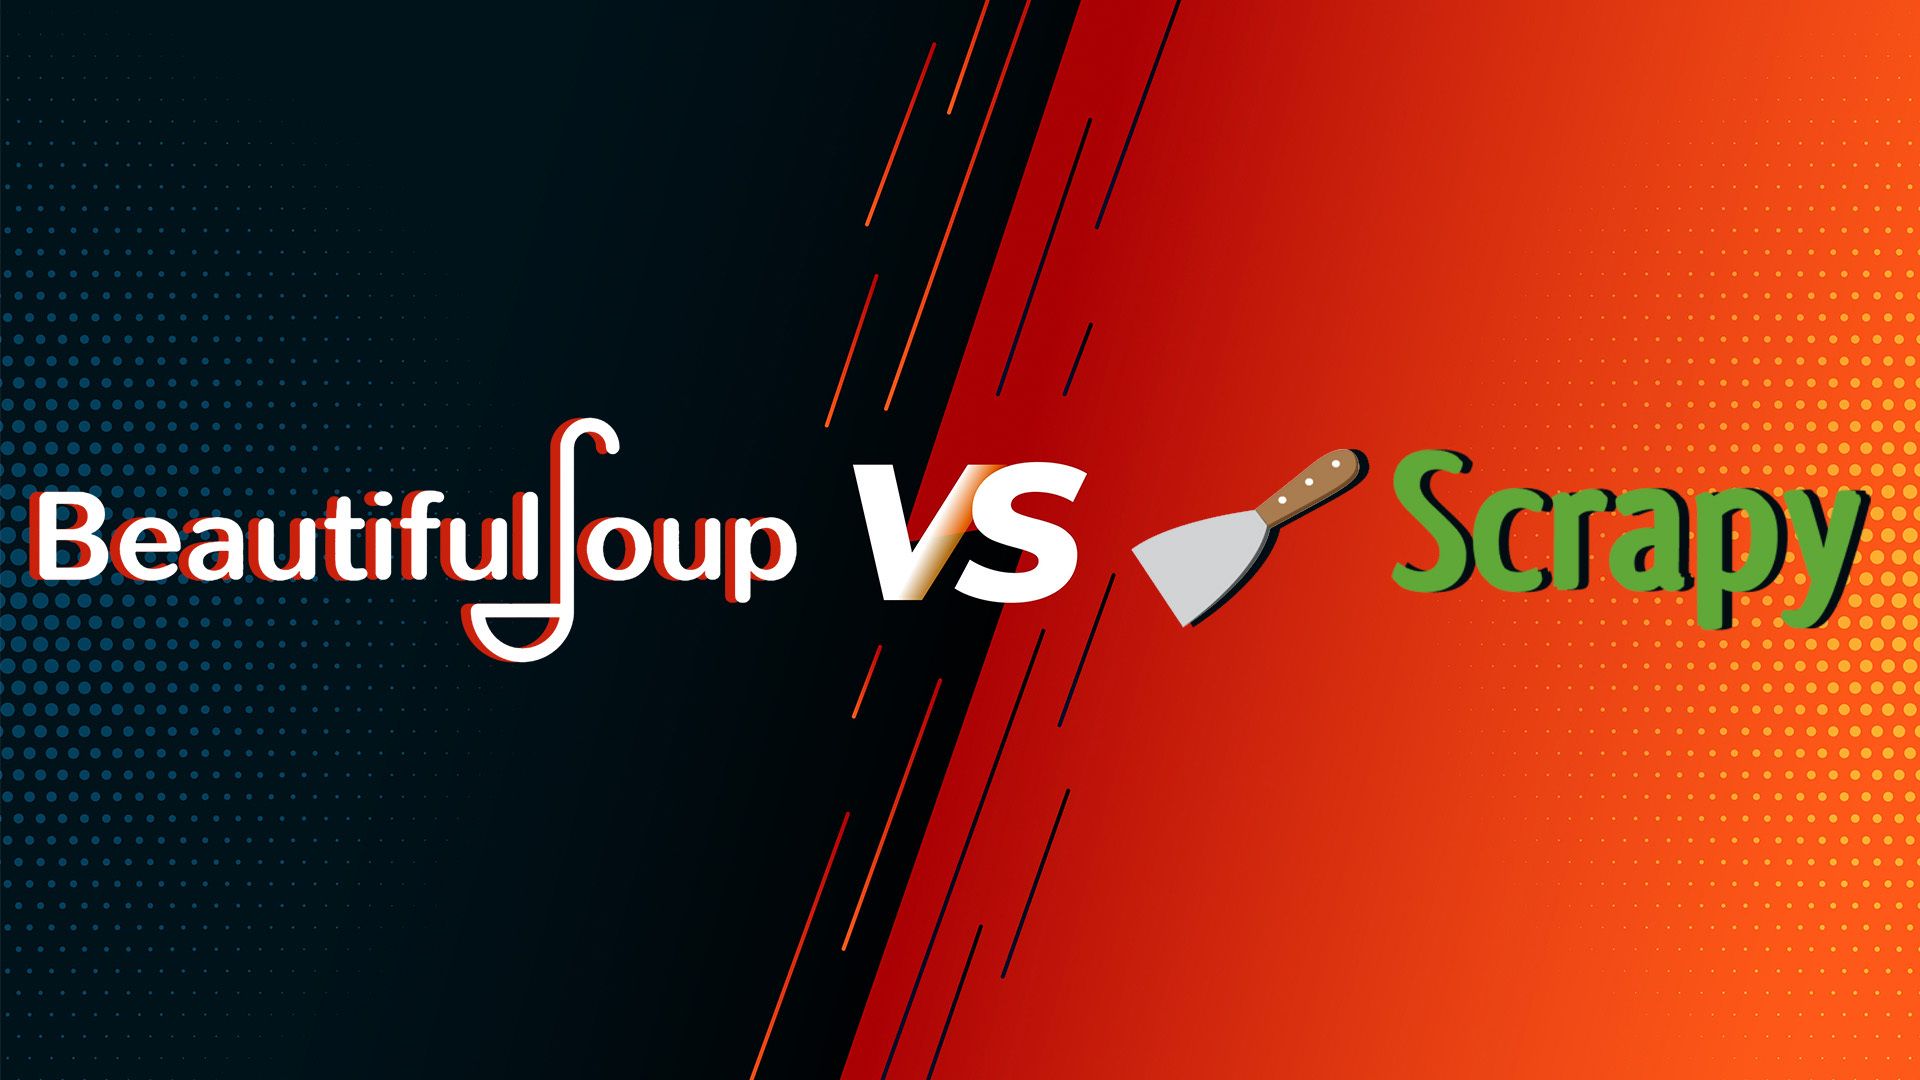 Beautiful Soup vs. Scrapy for web scraping